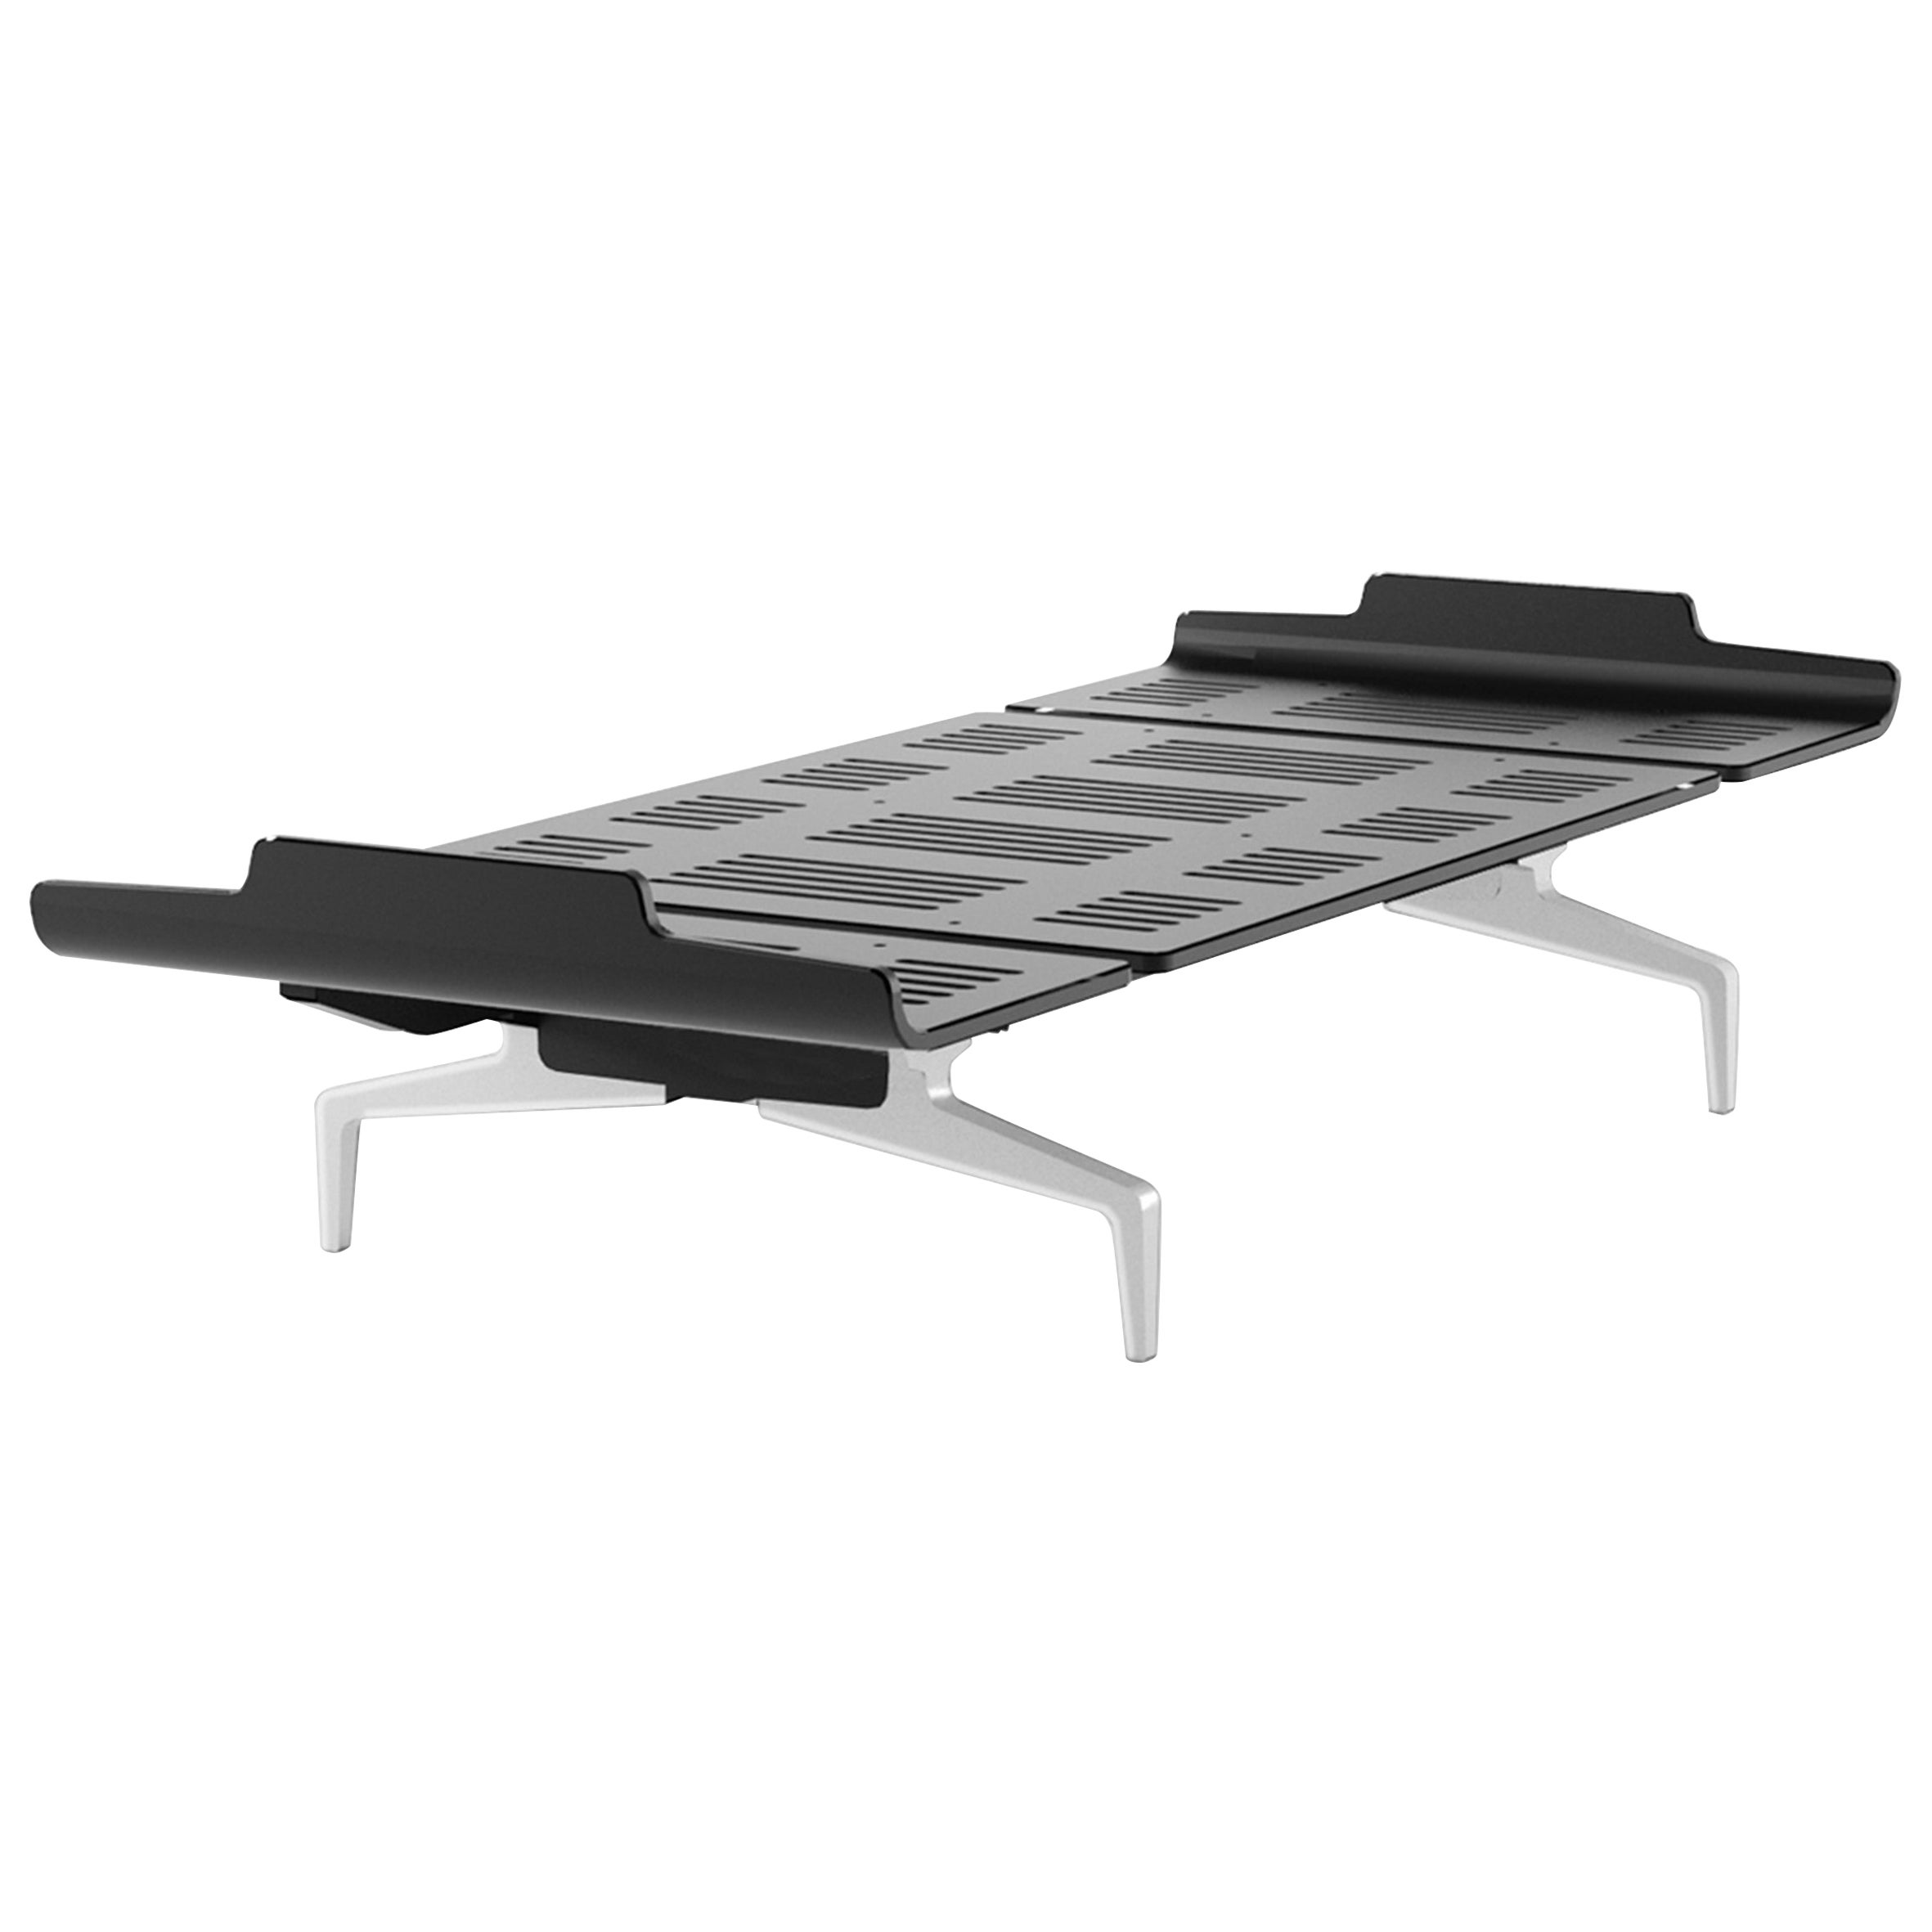 Alias Medium LL1 Legnoletto Bett in schwarzem Mattlack mit Aluminiumrahmen im Angebot